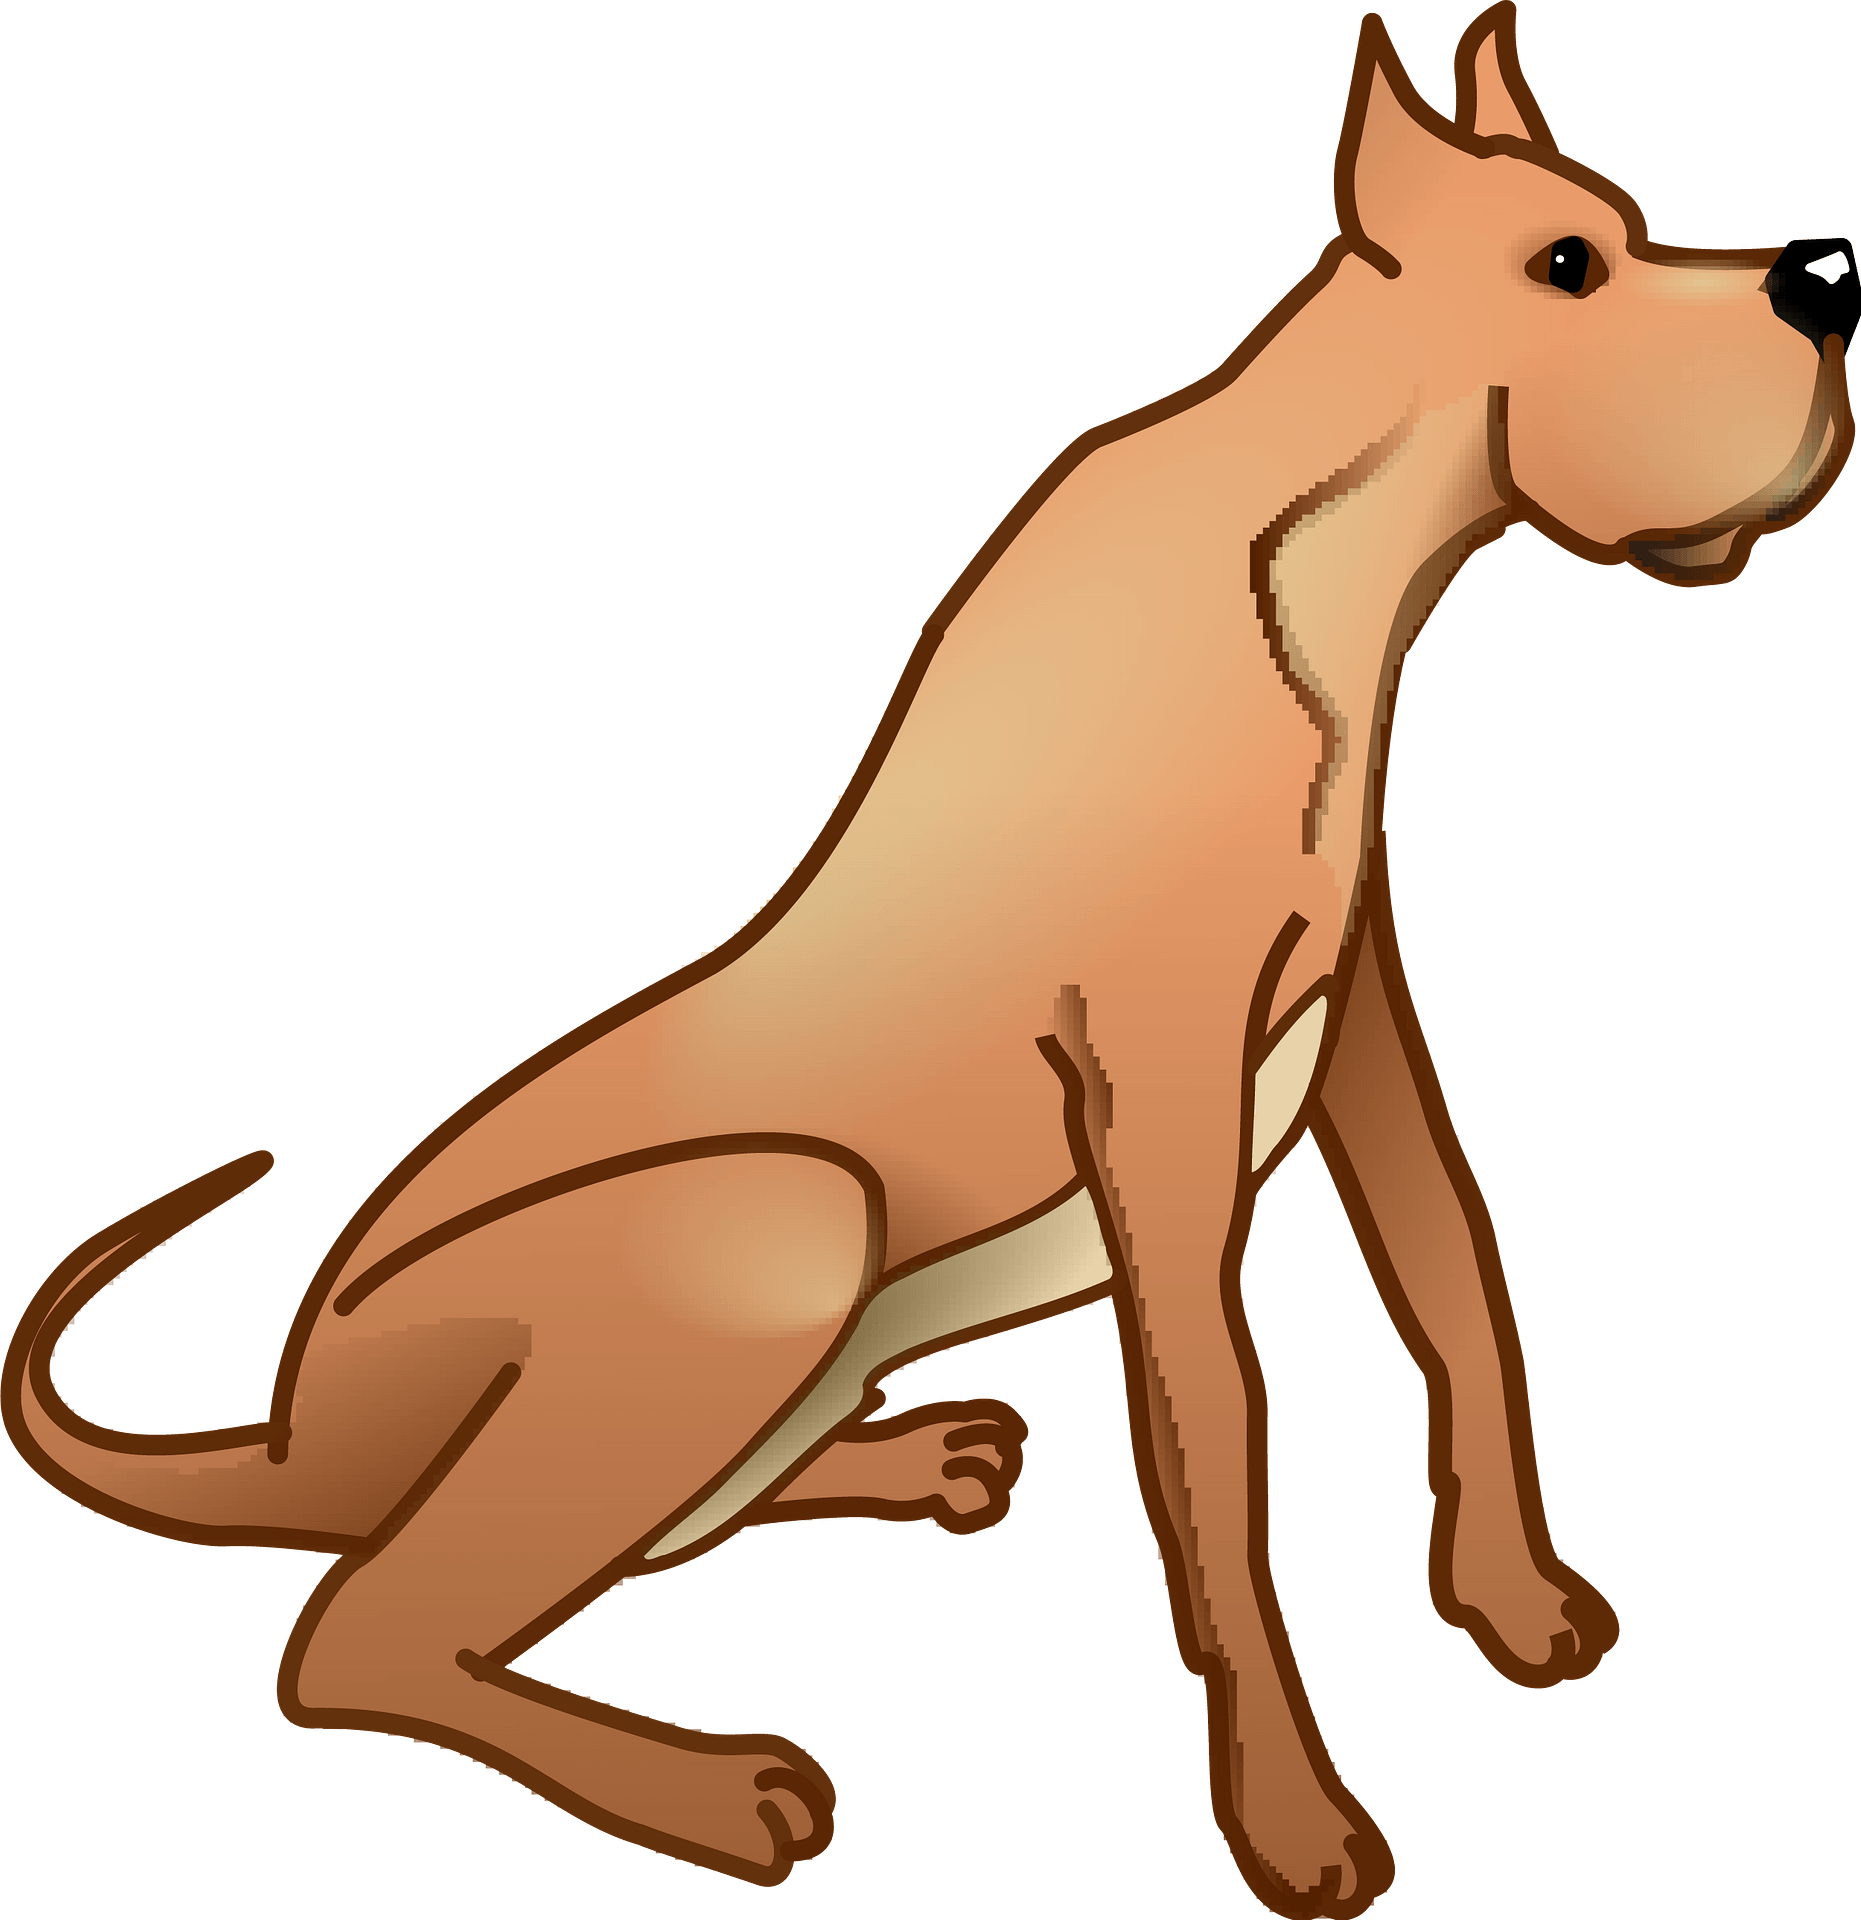 Image detail for -Great Dane Clipart Image - Great Dane dog - Clip Art ...